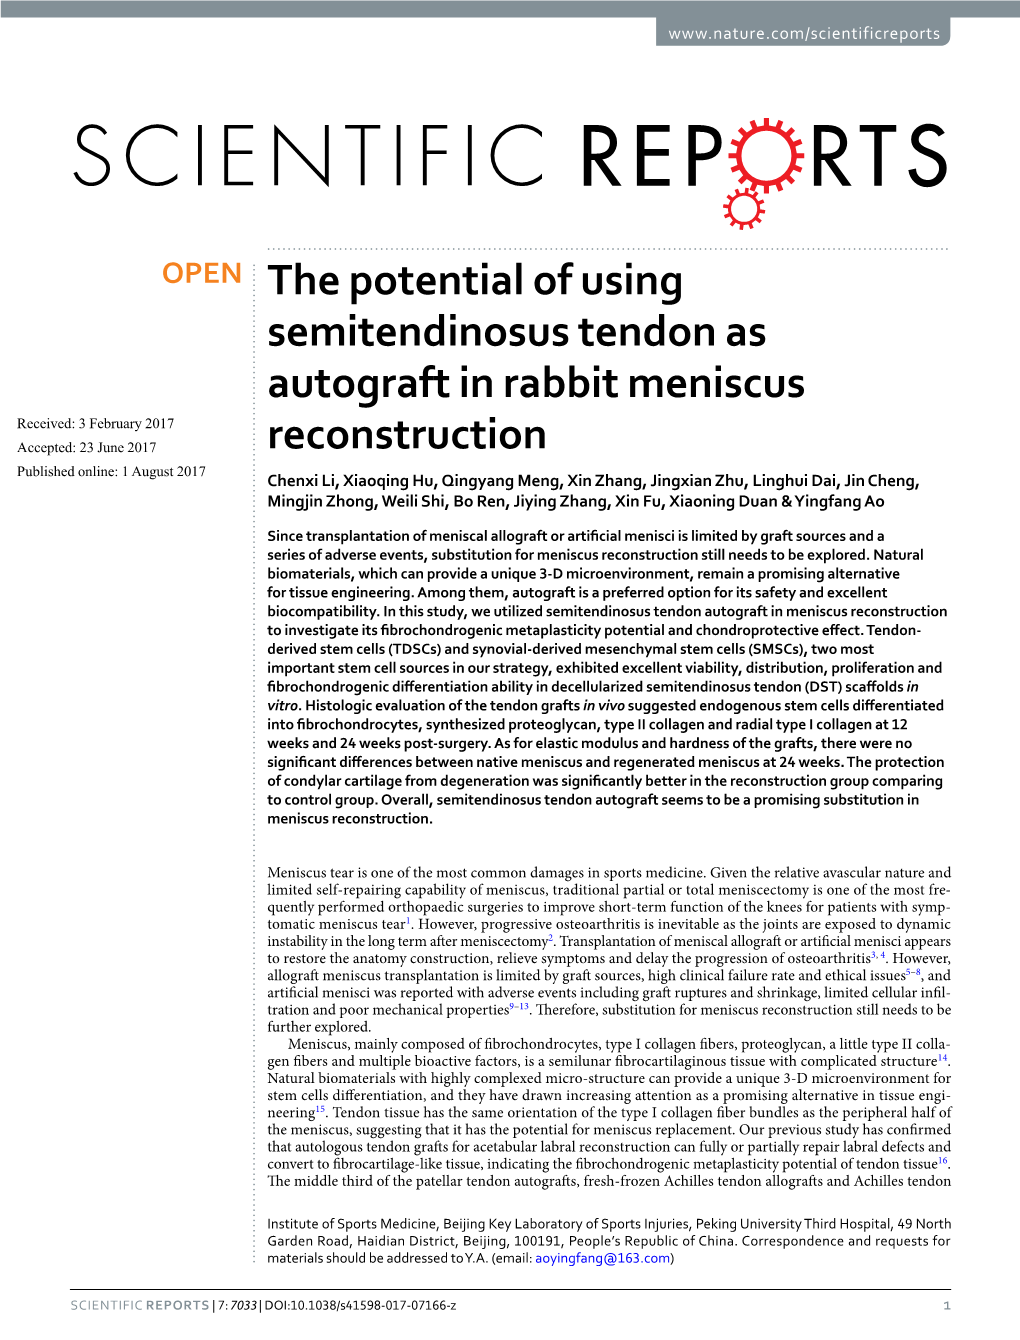 The Potential of Using Semitendinosus Tendon As Autograft in Rabbit